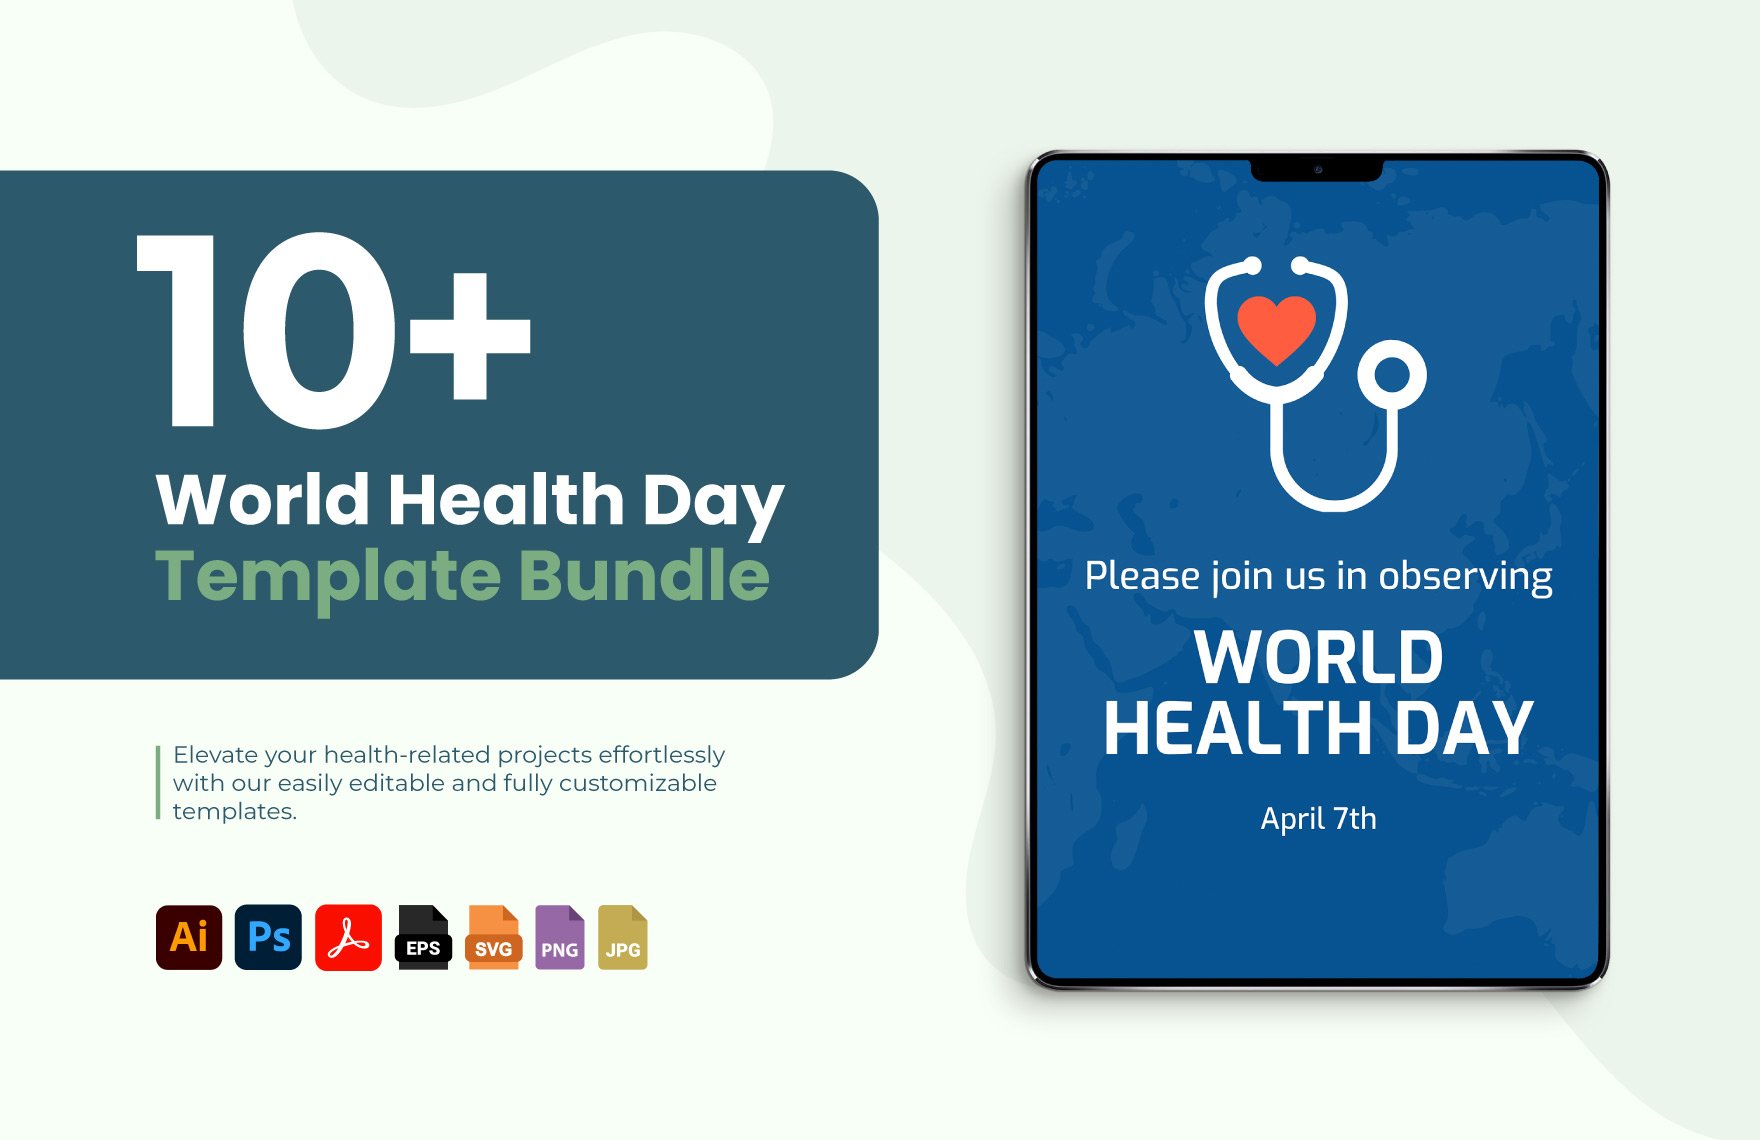 10+ World Health Day Template Bundle